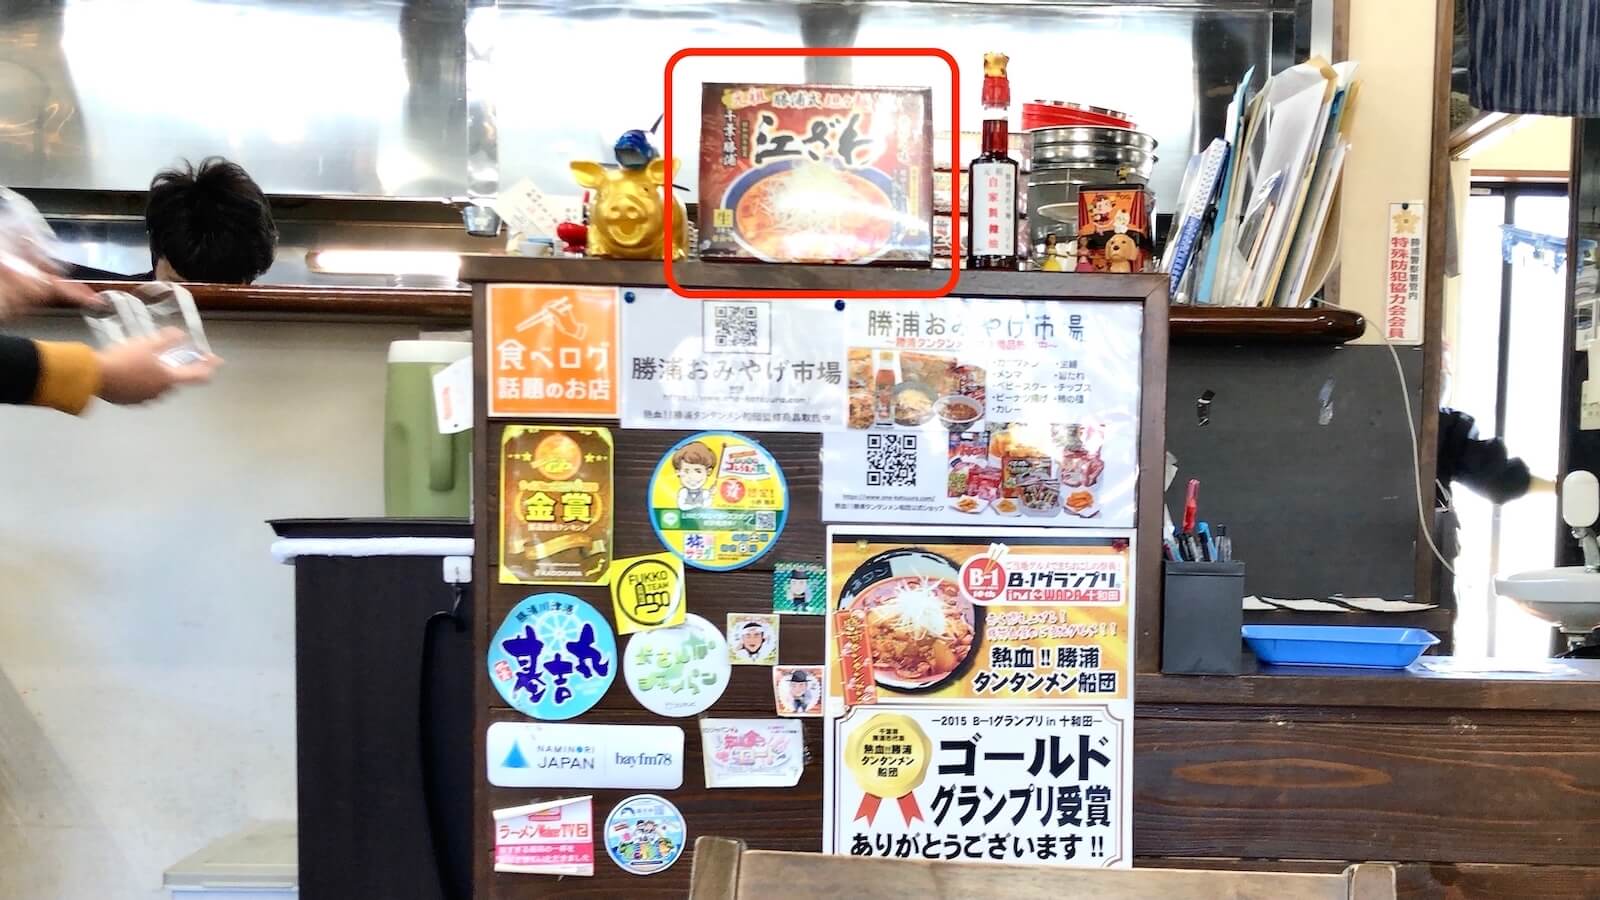 Katsuura Tantan Noodles Instant noodles placed at the Ezawa cash register